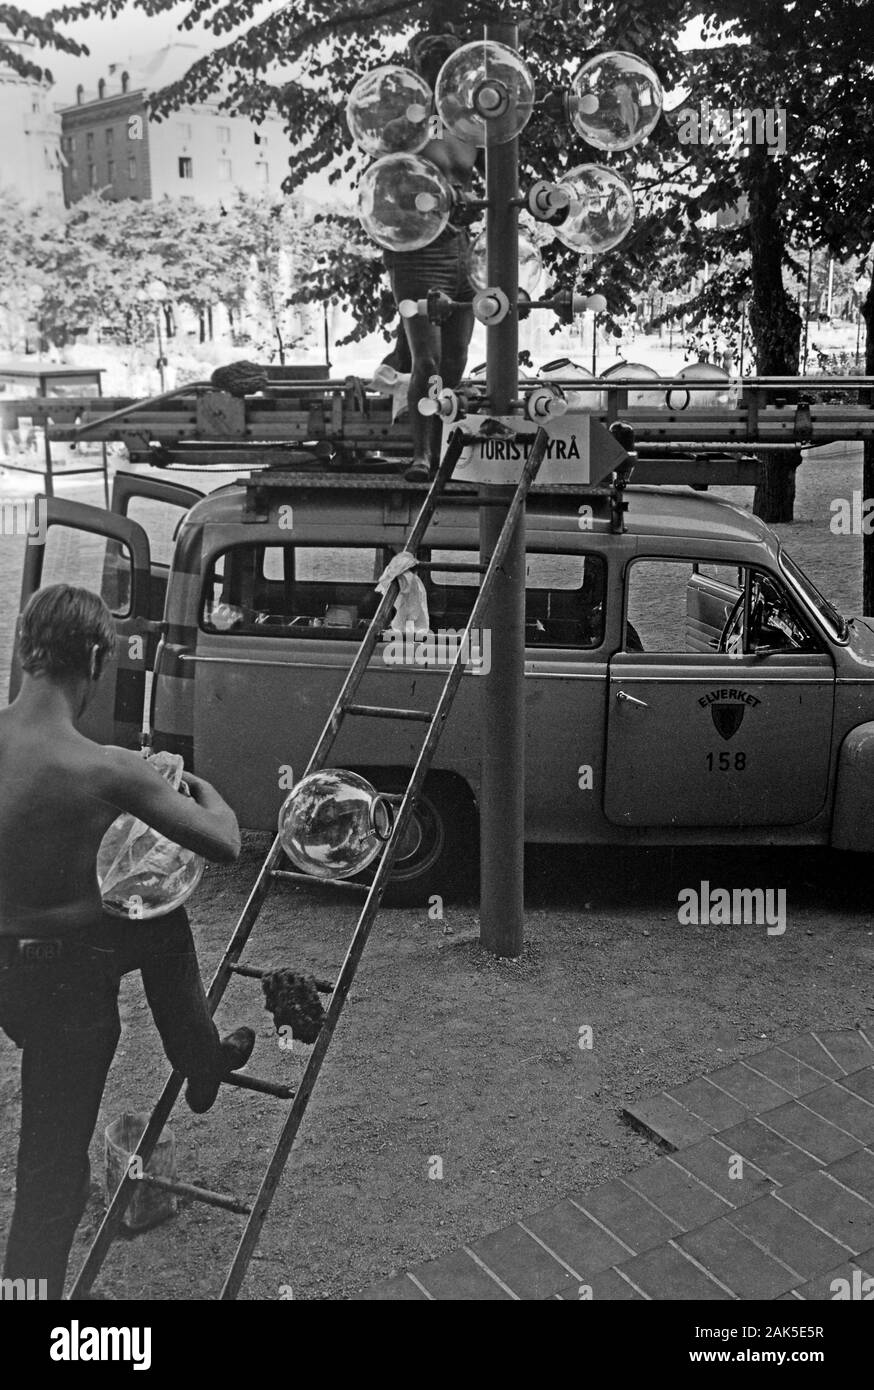 Lampenputzer bei der Arbeit vor dem Sverigehuset in der Hamngatan am Kungsträdgarden, 1969. Lamp cleaners at work in front of Sverigehuset on Hamngatan at Kungsträdgarden, 1969. Stock Photo